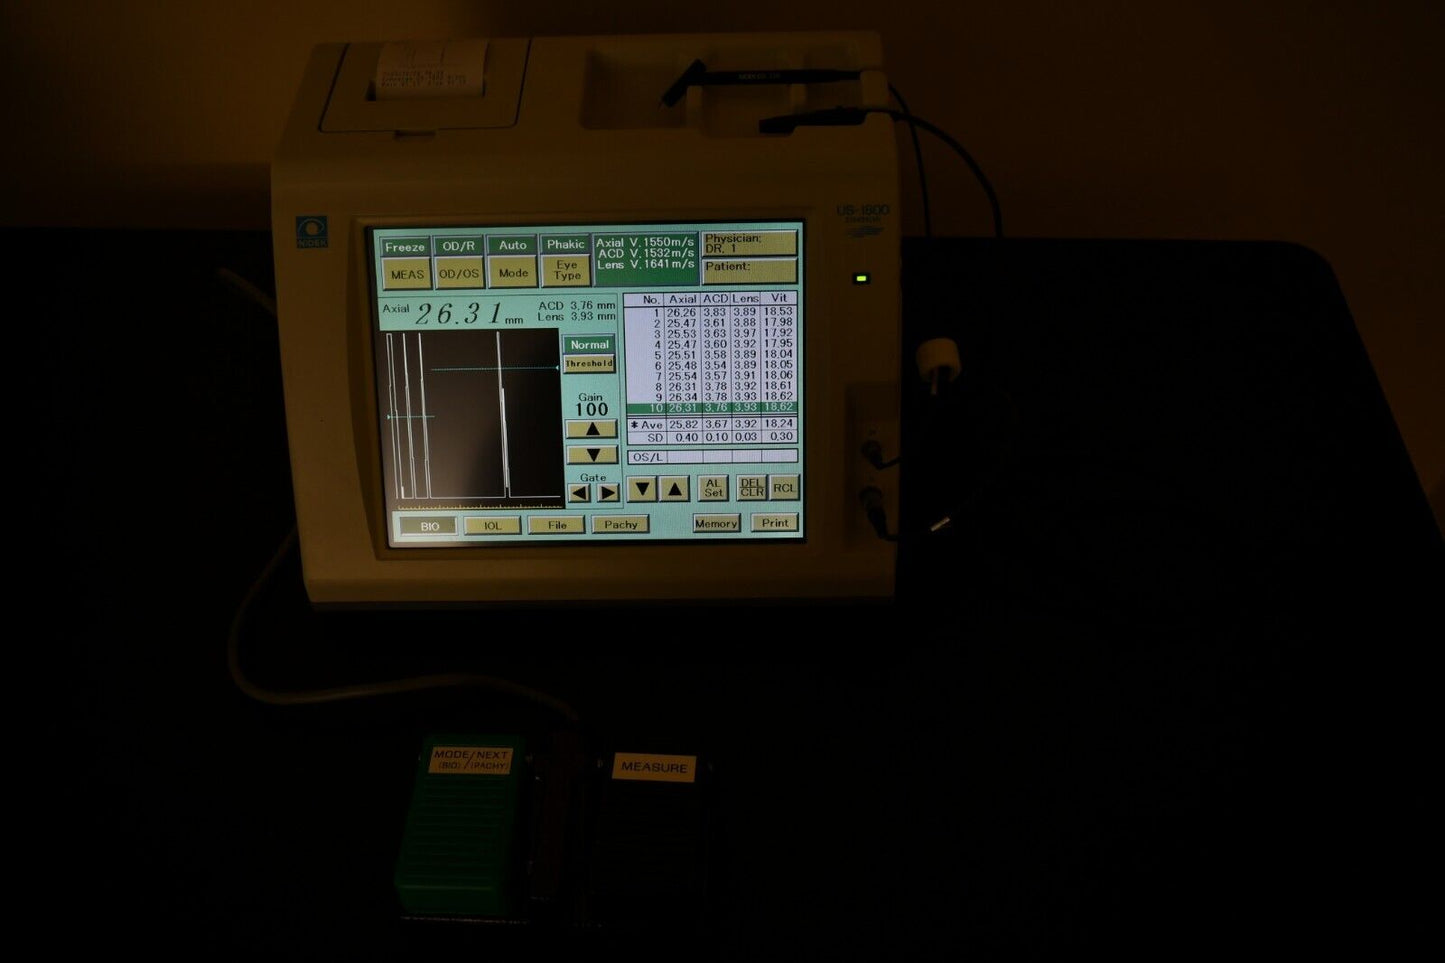 Nidek US-1800 Ultrasound A-scan and Pachymeter Biometer